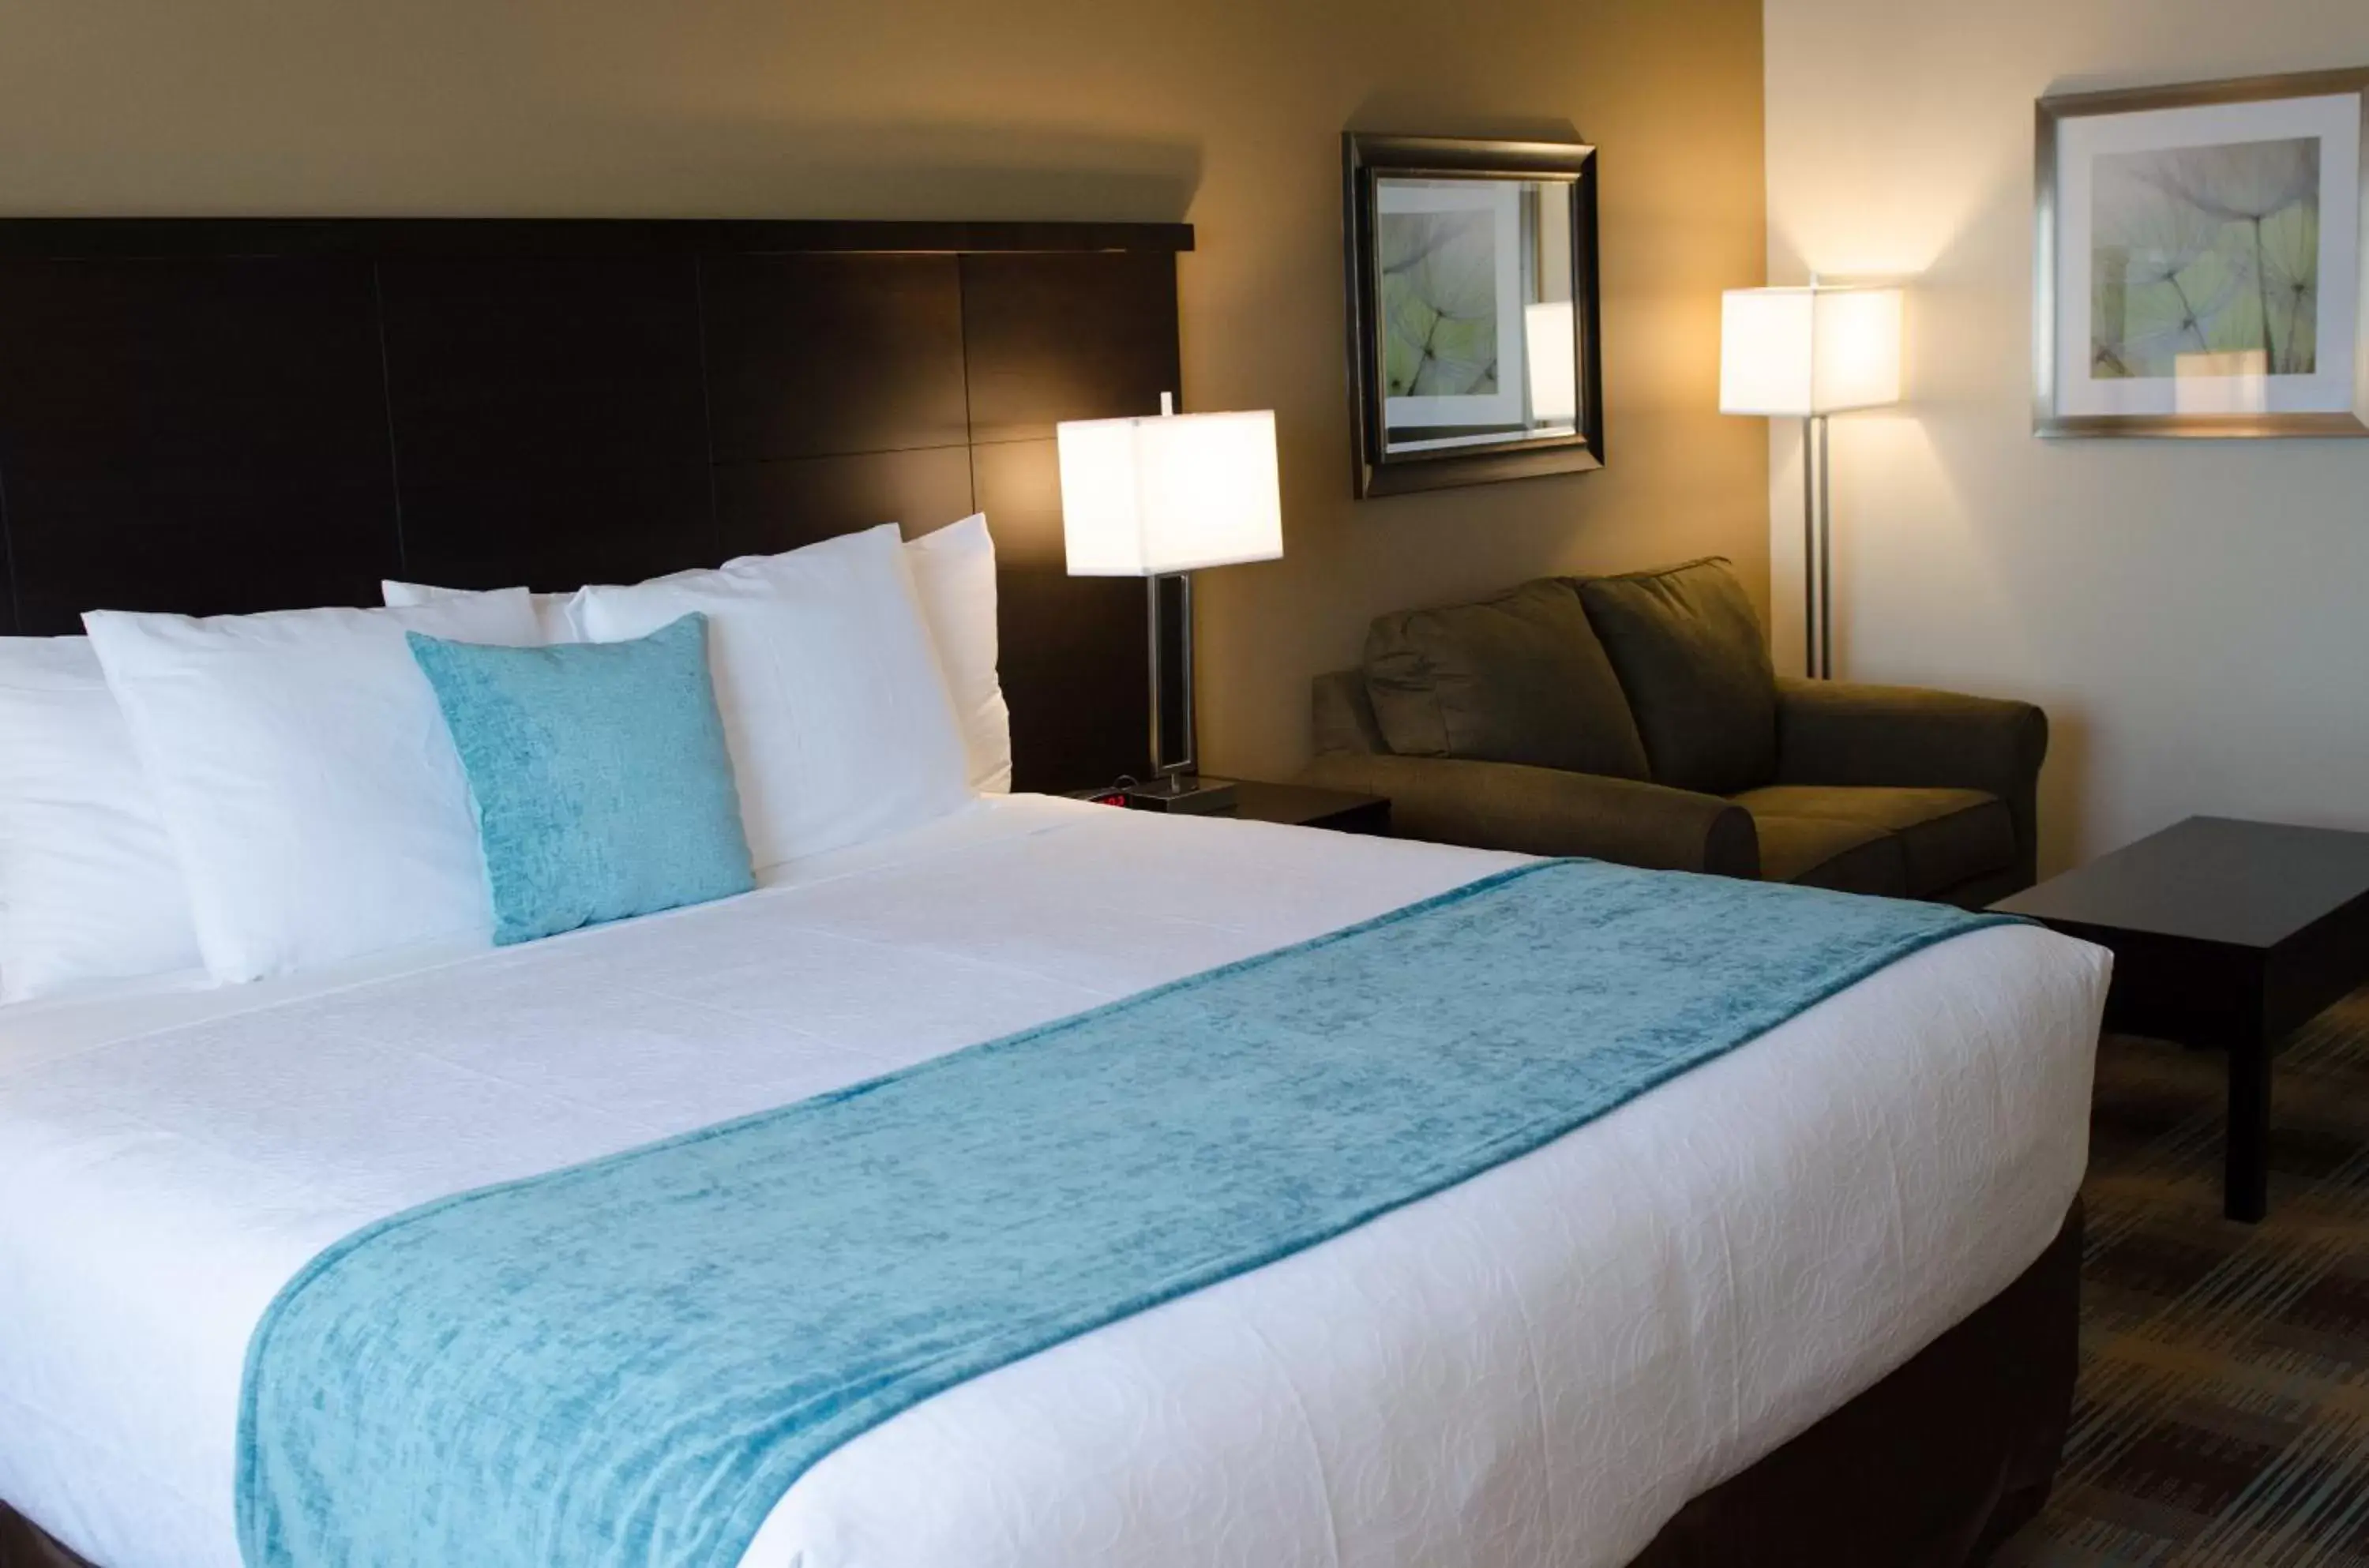 Bed, Room Photo in Inn at Moses Lake